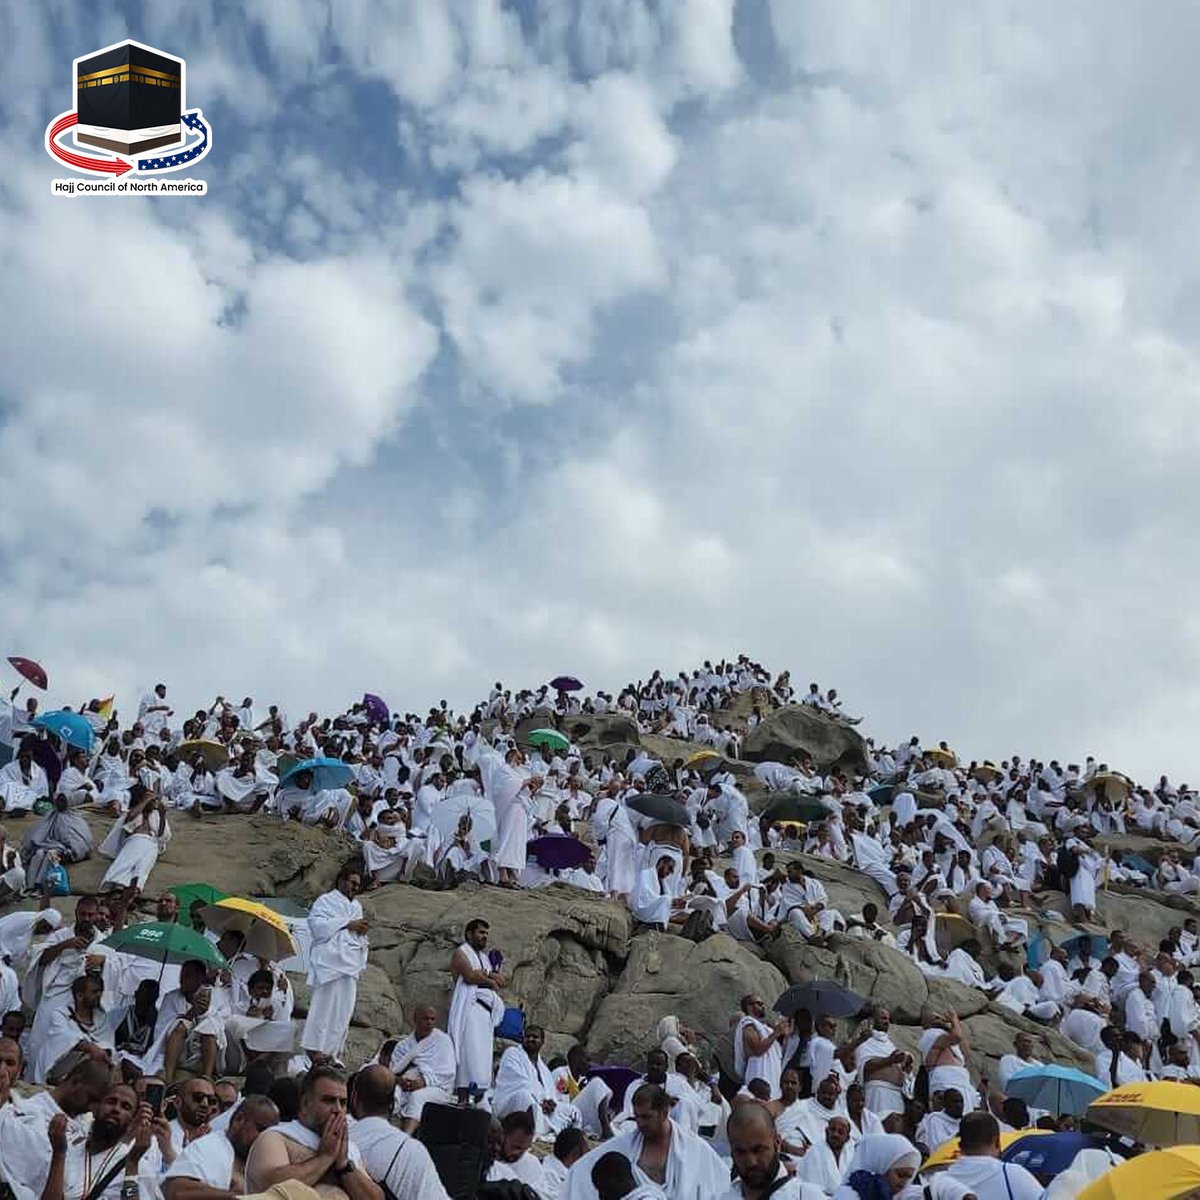 Embracing the spiritual aura at Jabal Al Rahma, where hearts unite in the journey of faith. 🕋✨ #JabalAlRahma #MountainOfMercy #SpiritualJourney #UnityInWorship #HoliestPeak #HajjExperience #BlessedMoments #SacredSerenity